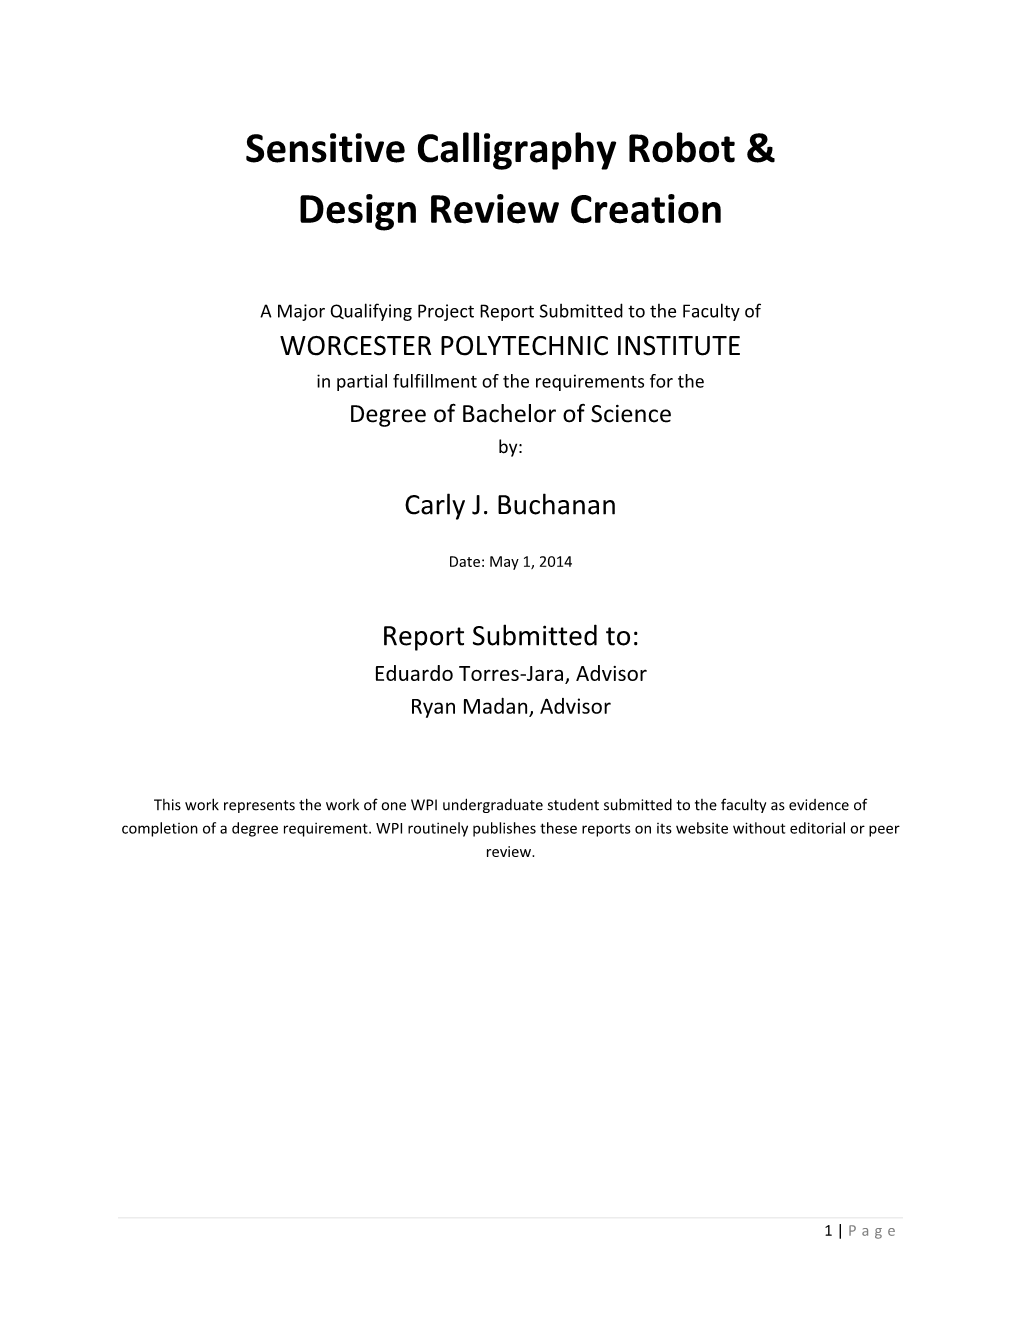 Sensitive Calligraphy Robot & Design Review Creation